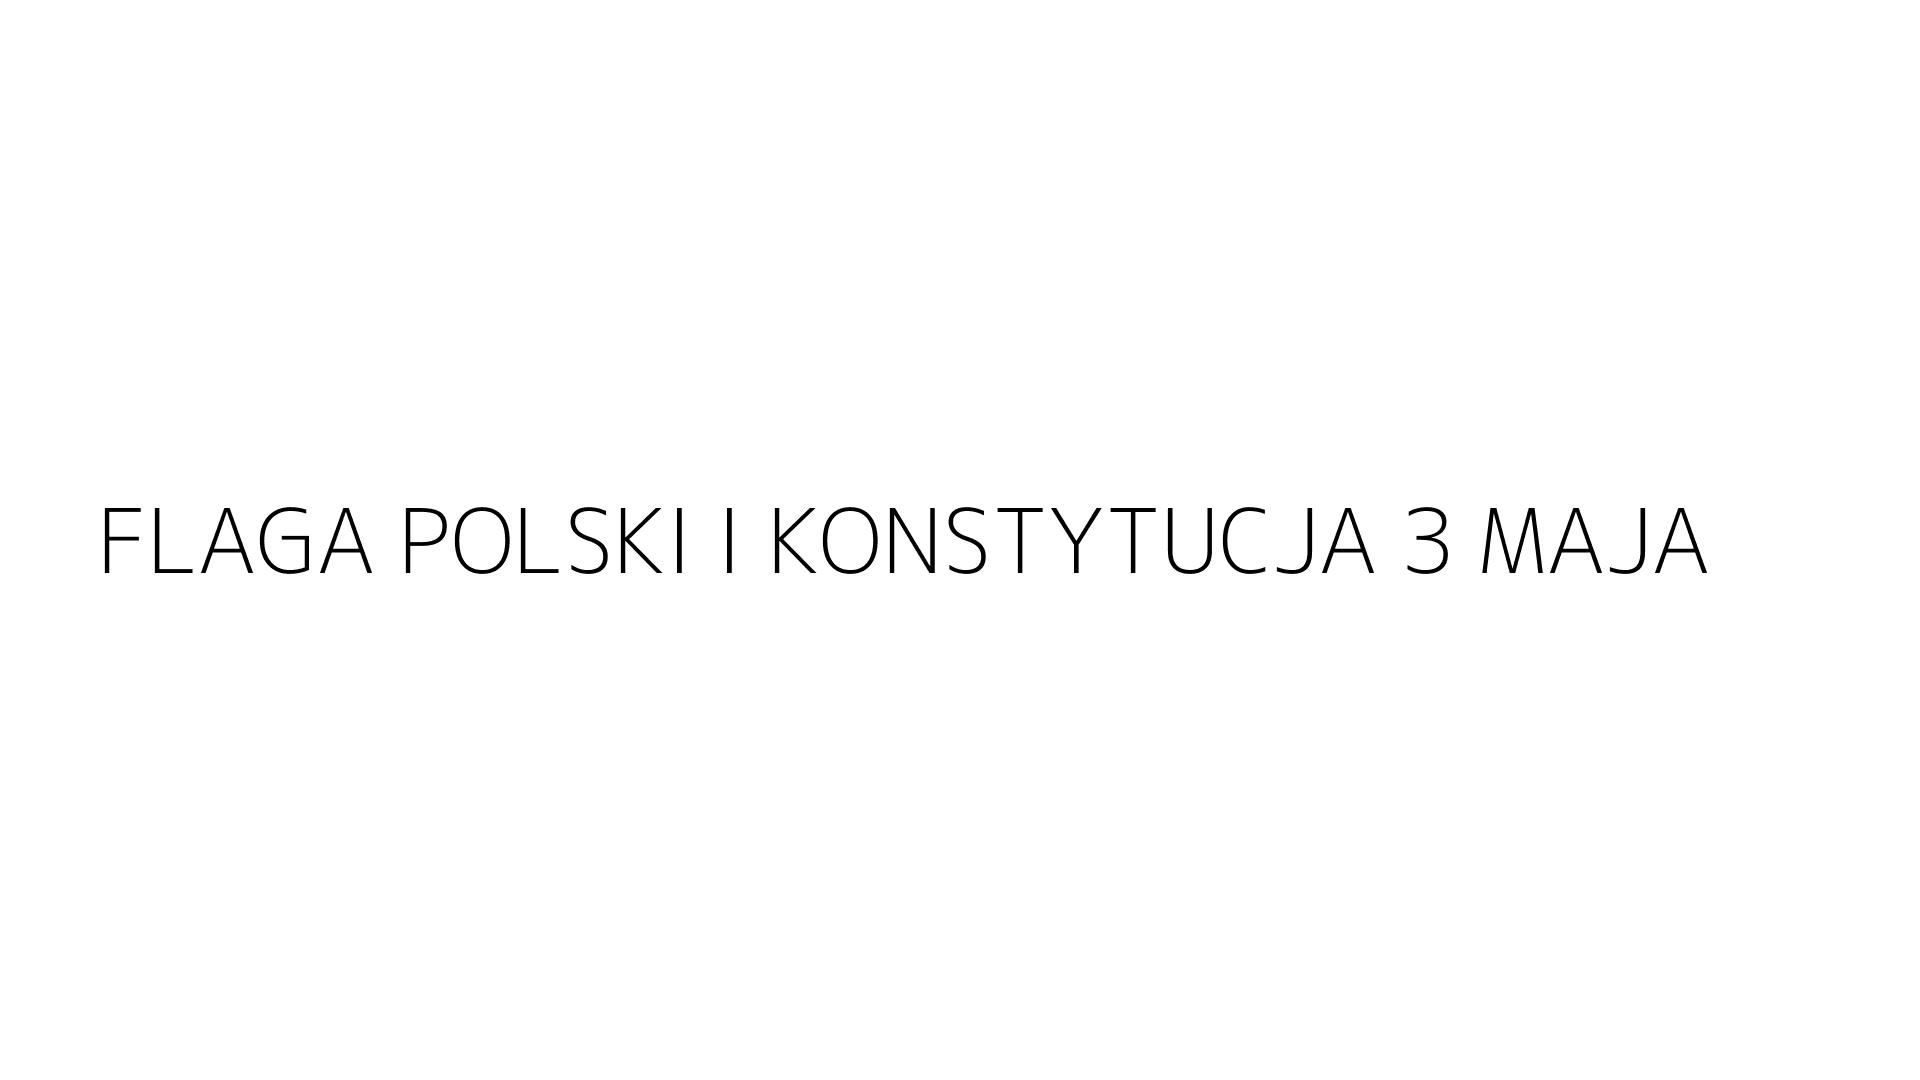 FLAGA POLSKI I KONSTYTUCJA 3 MAJA